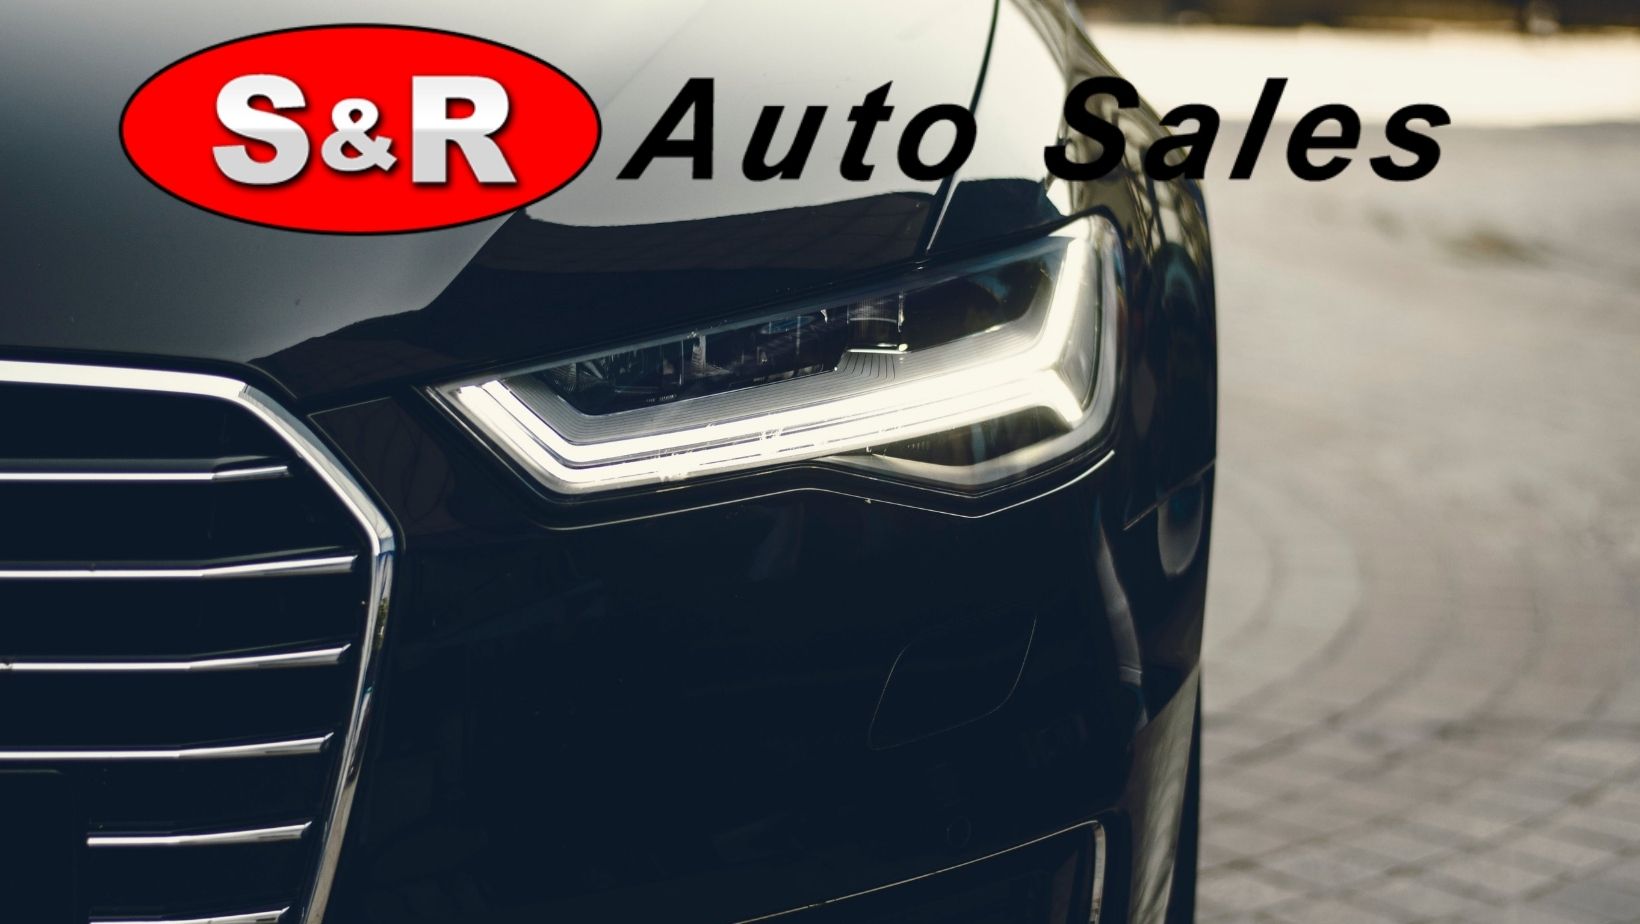 S&R Auto Sales